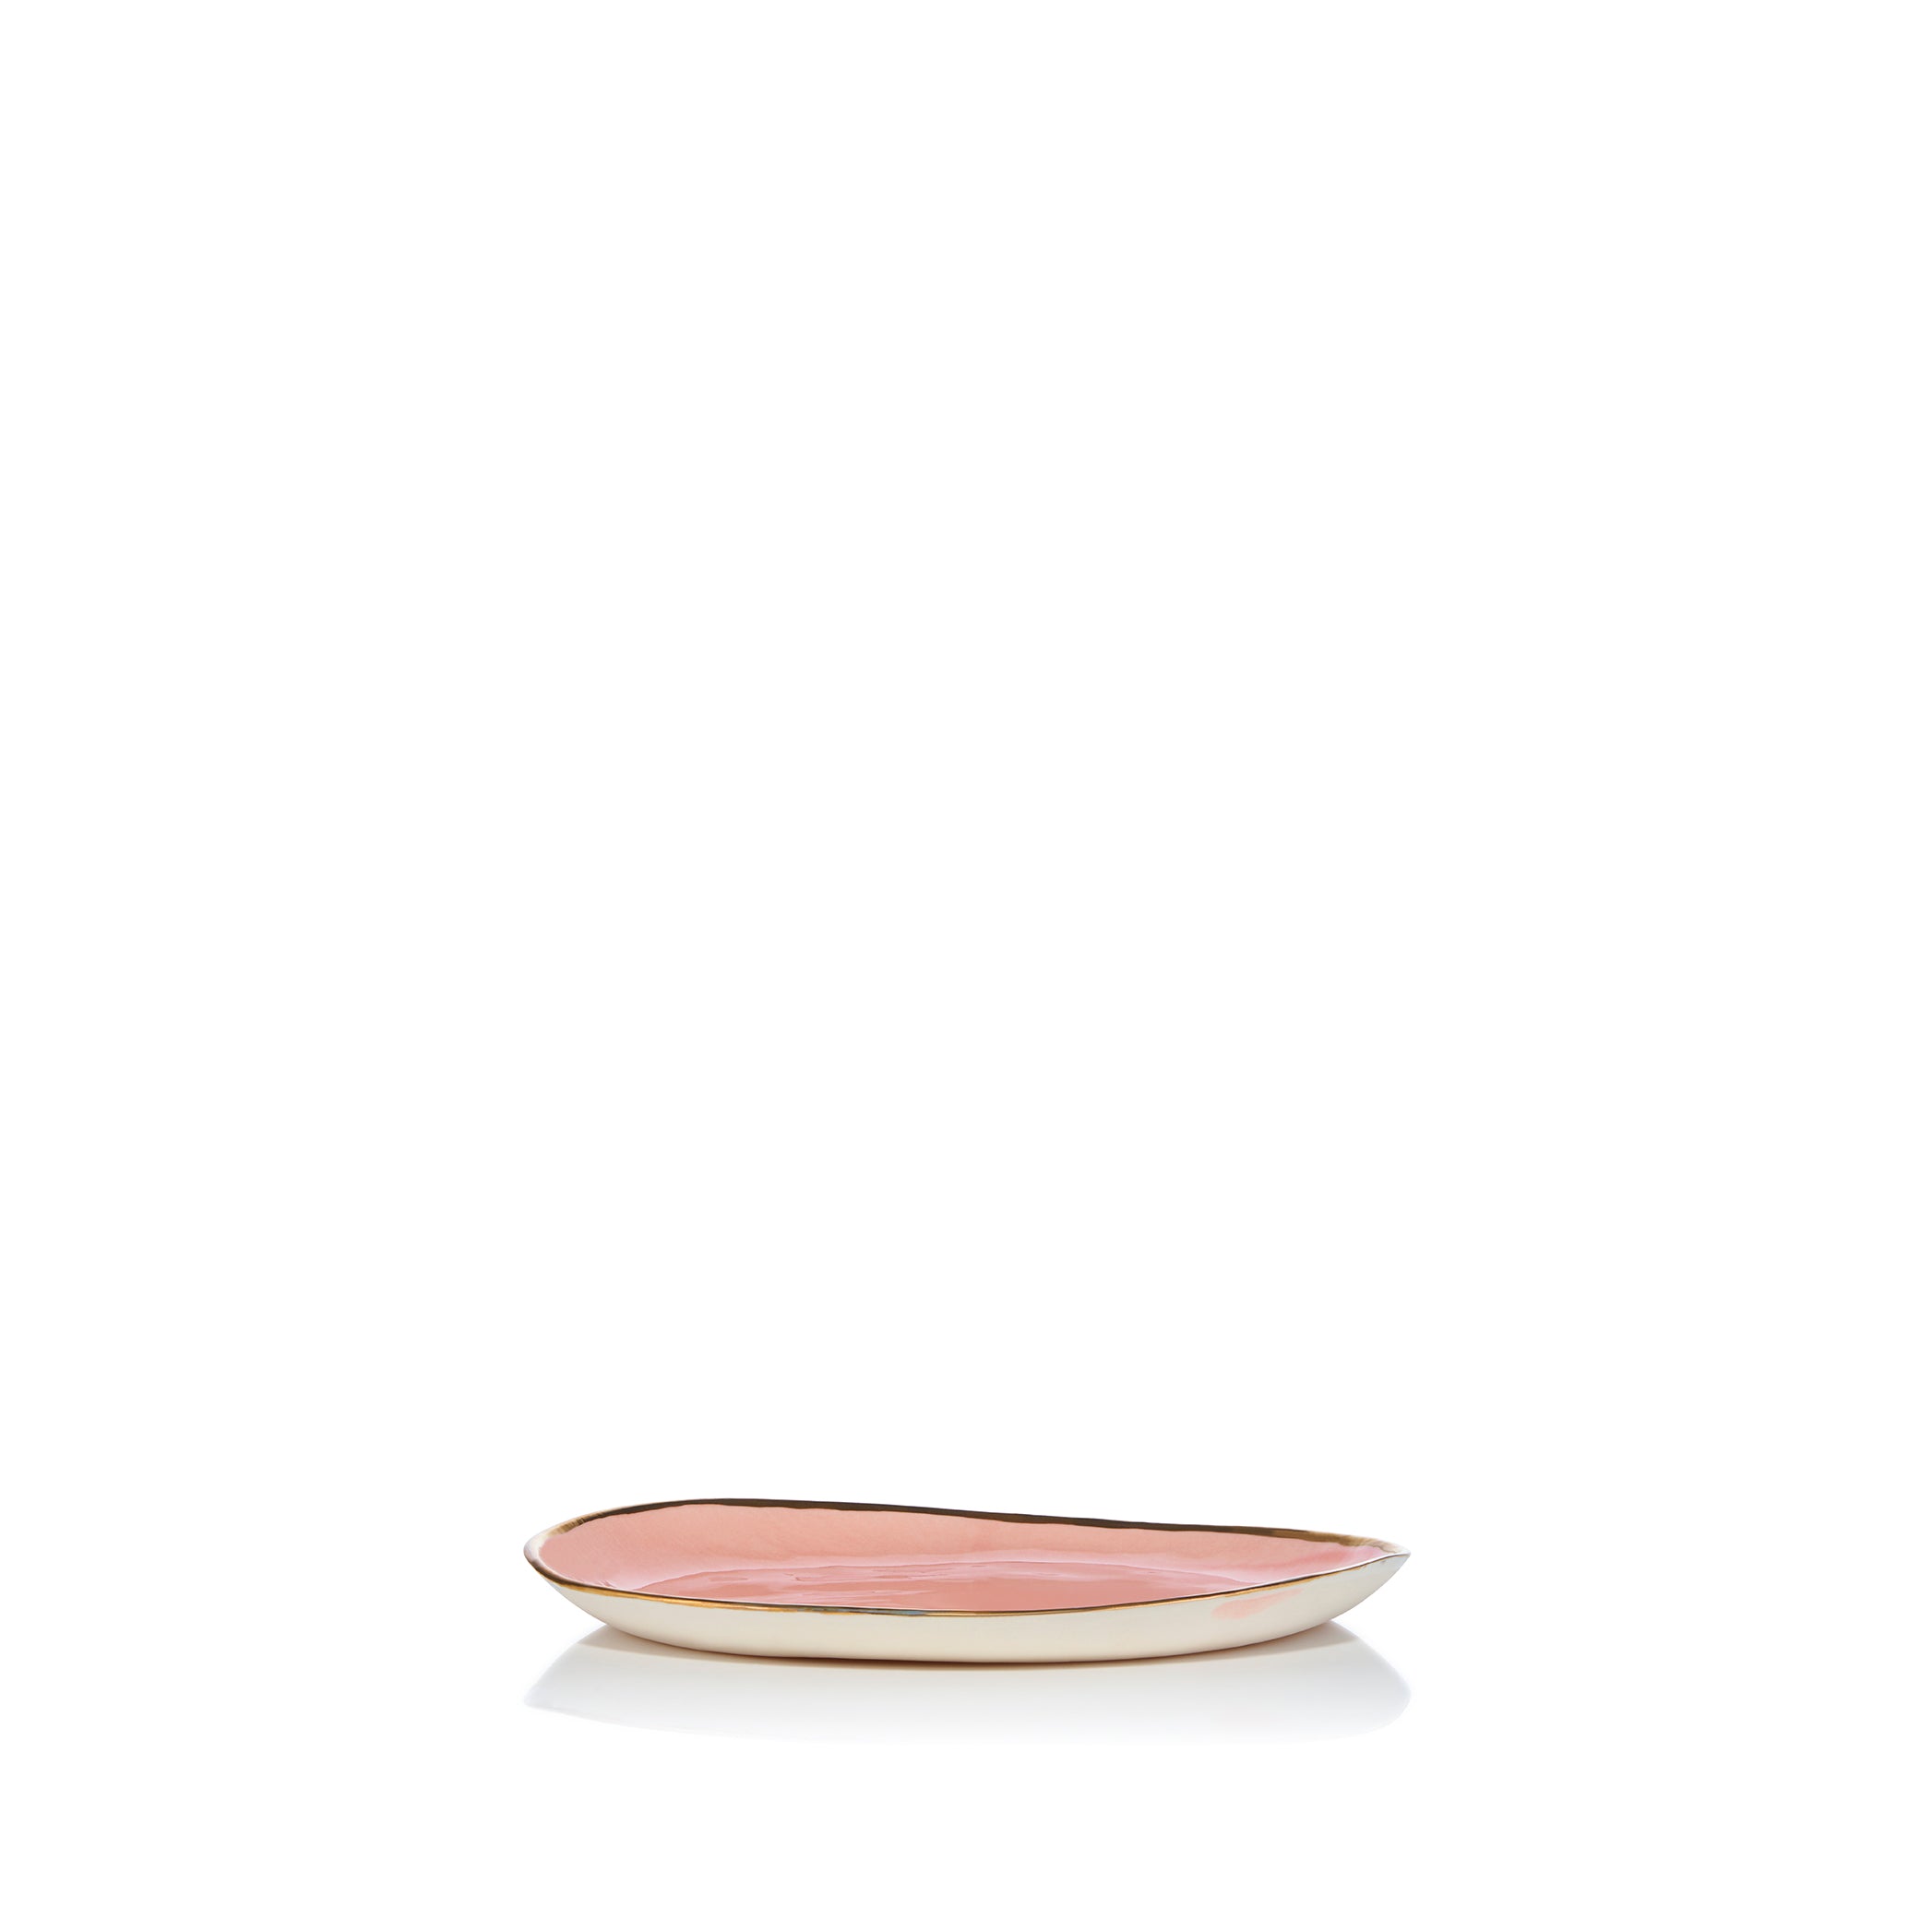 Handmade 20cm Pink Ceramic Side Plate with 24 Carat Gold Rim